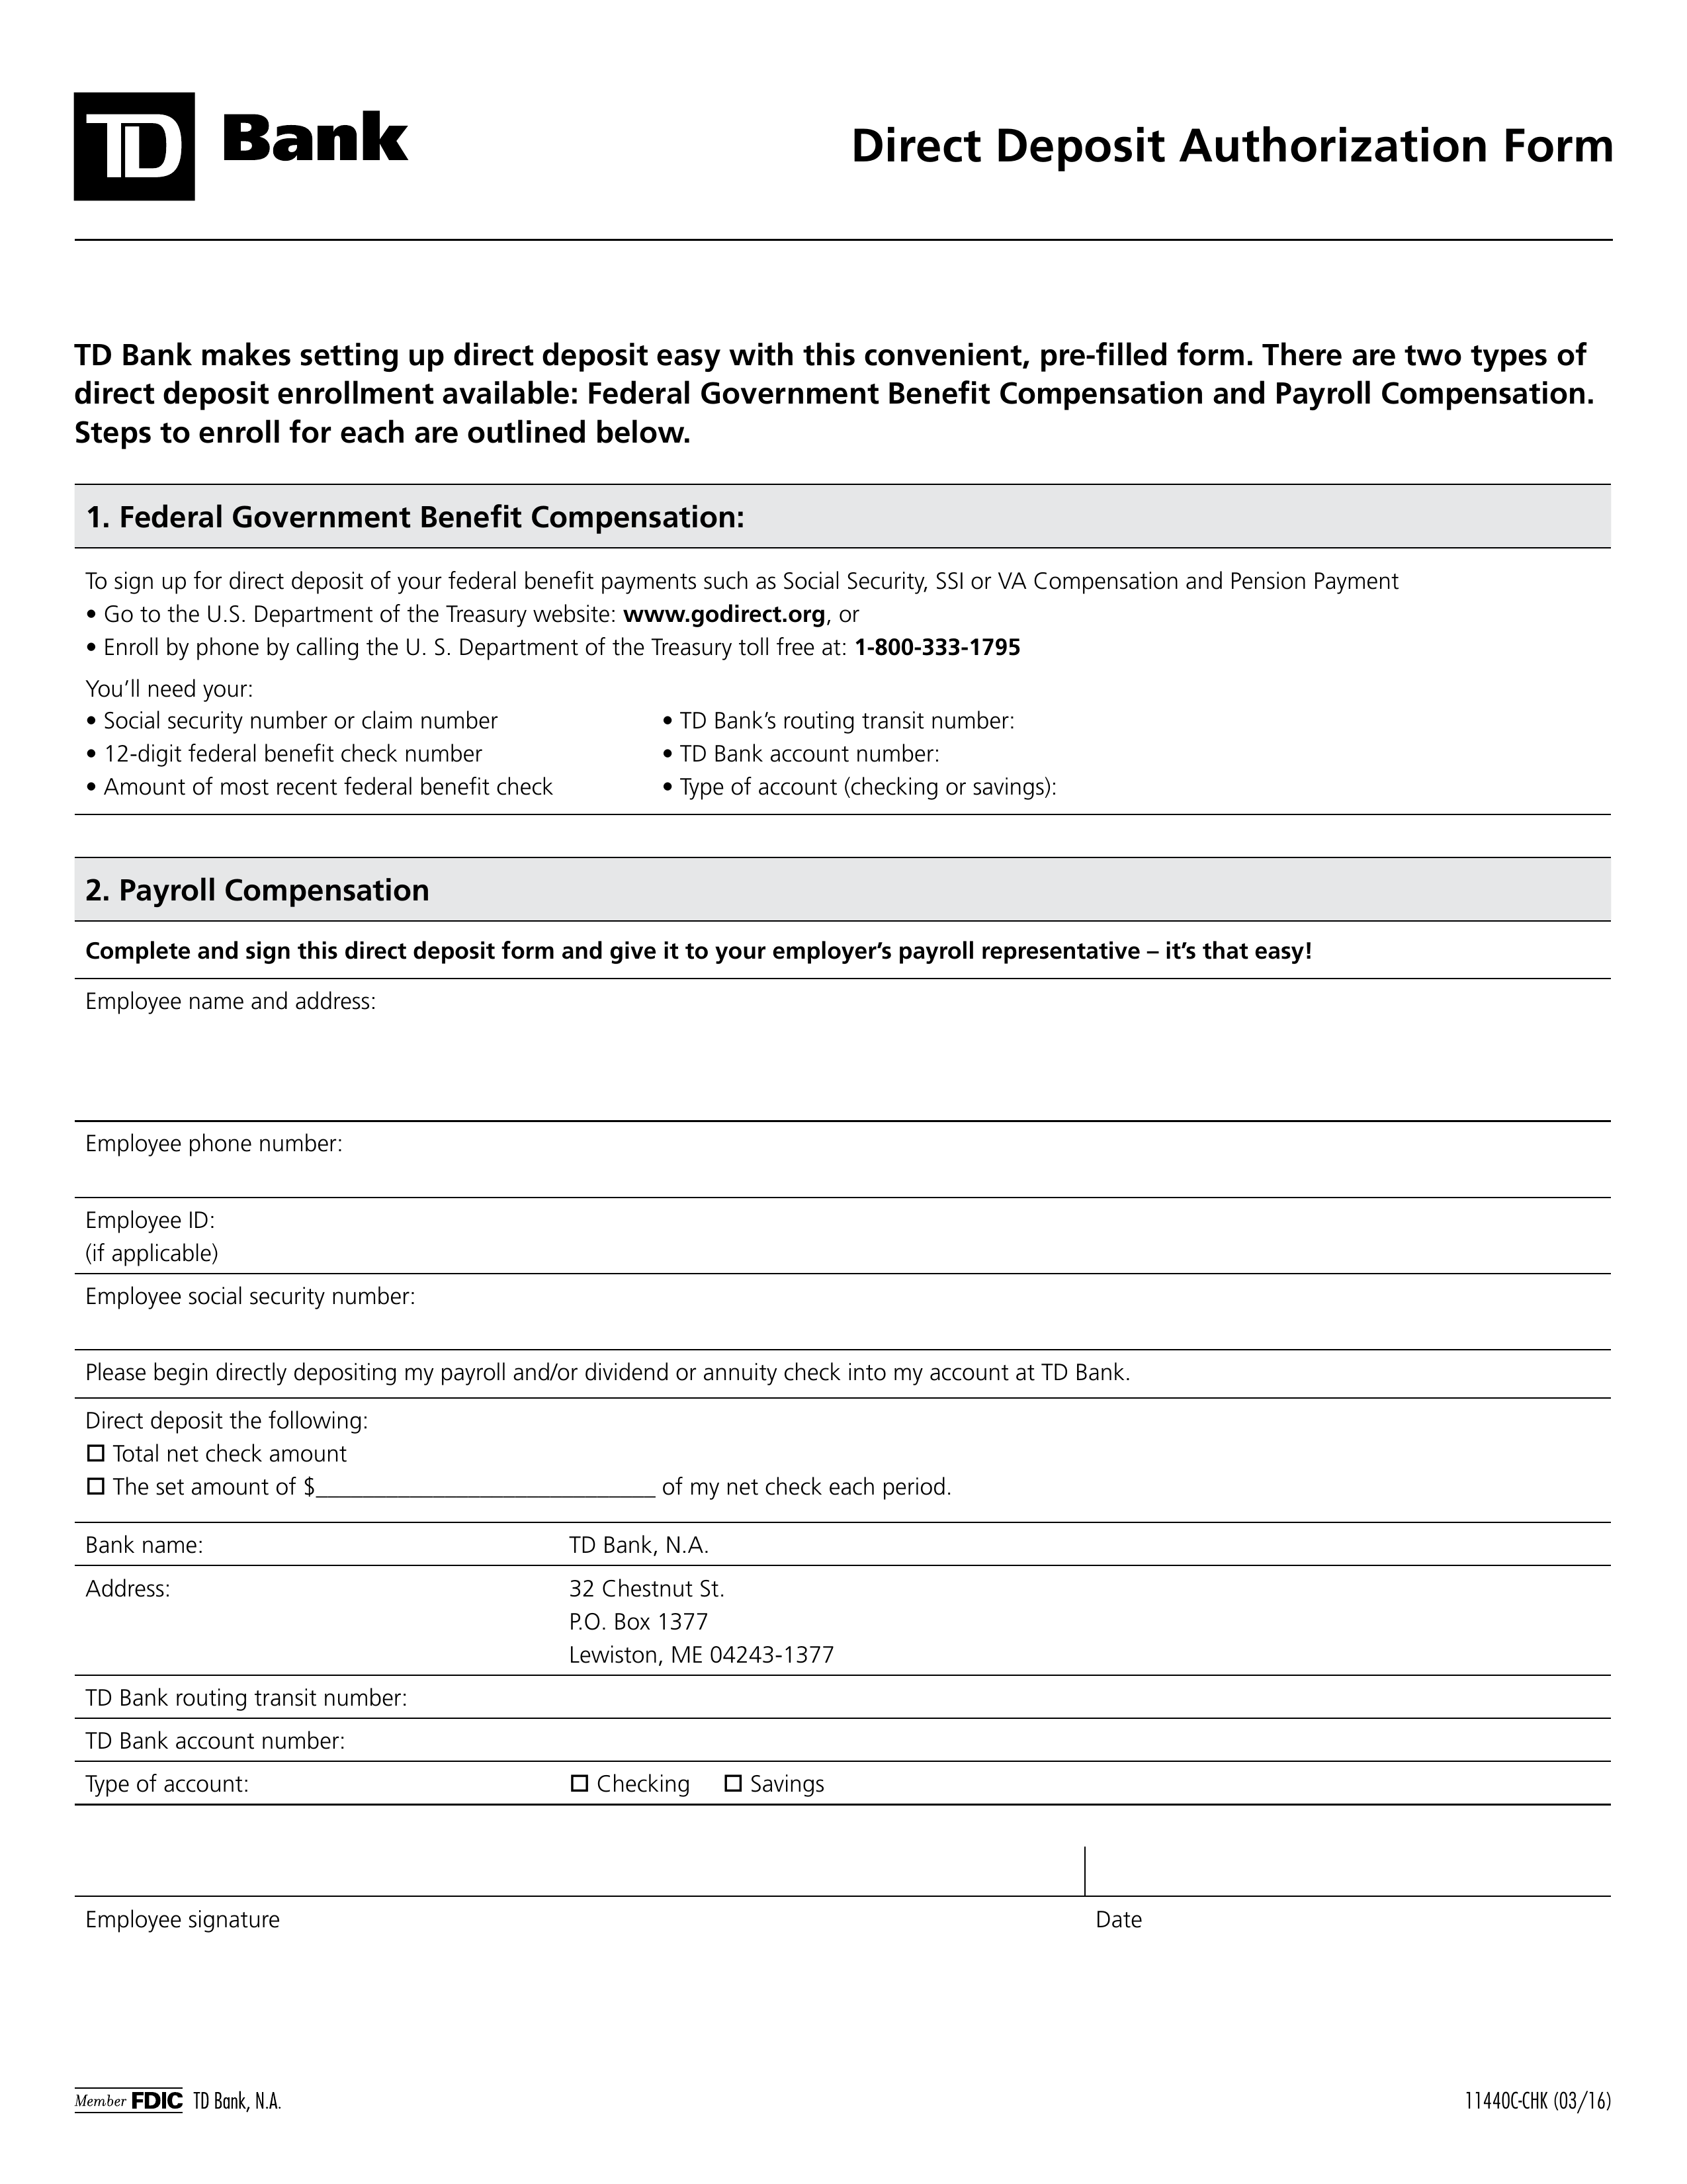 TD Bank Direct Deposit Authorization Form